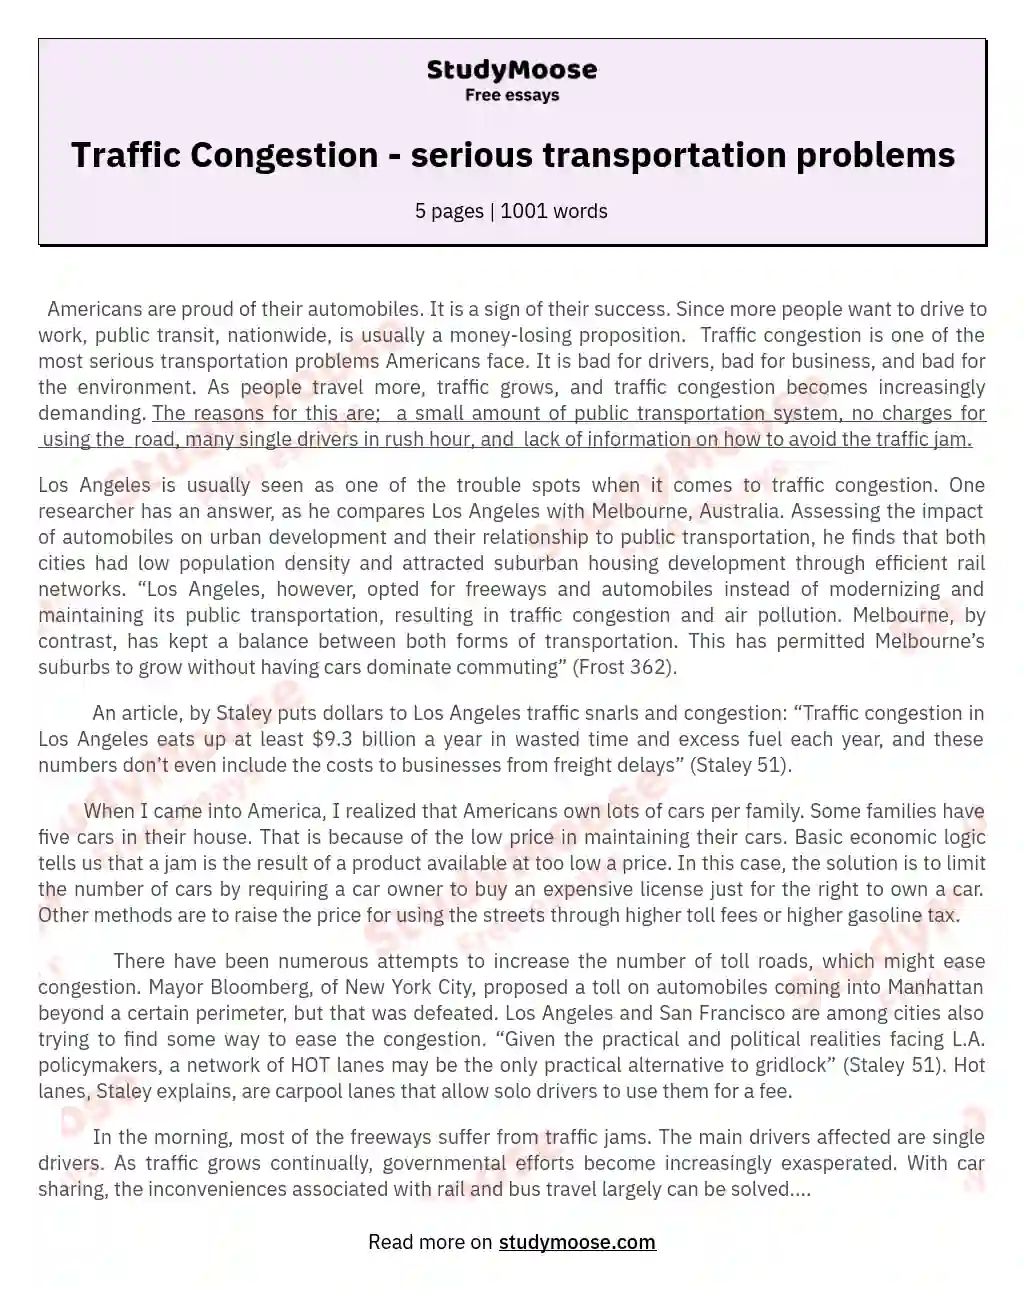 Traffic Congestion - serious transportation problems essay